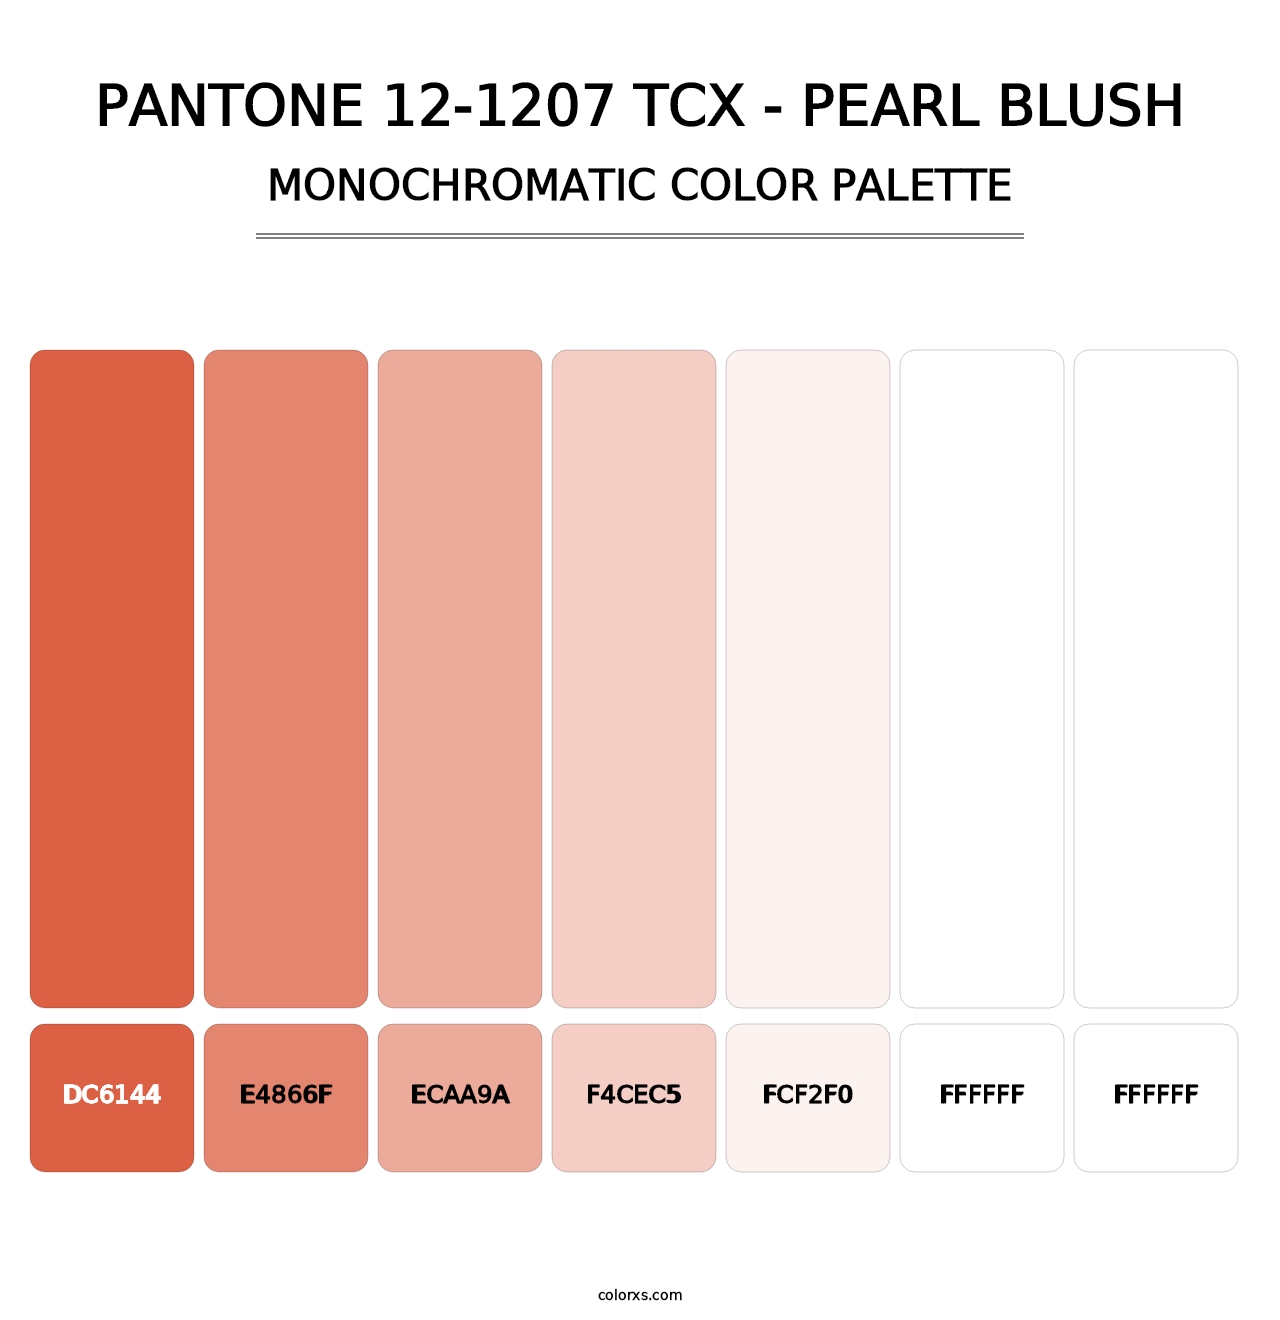 PANTONE 12-1207 TCX - Pearl Blush - Monochromatic Color Palette